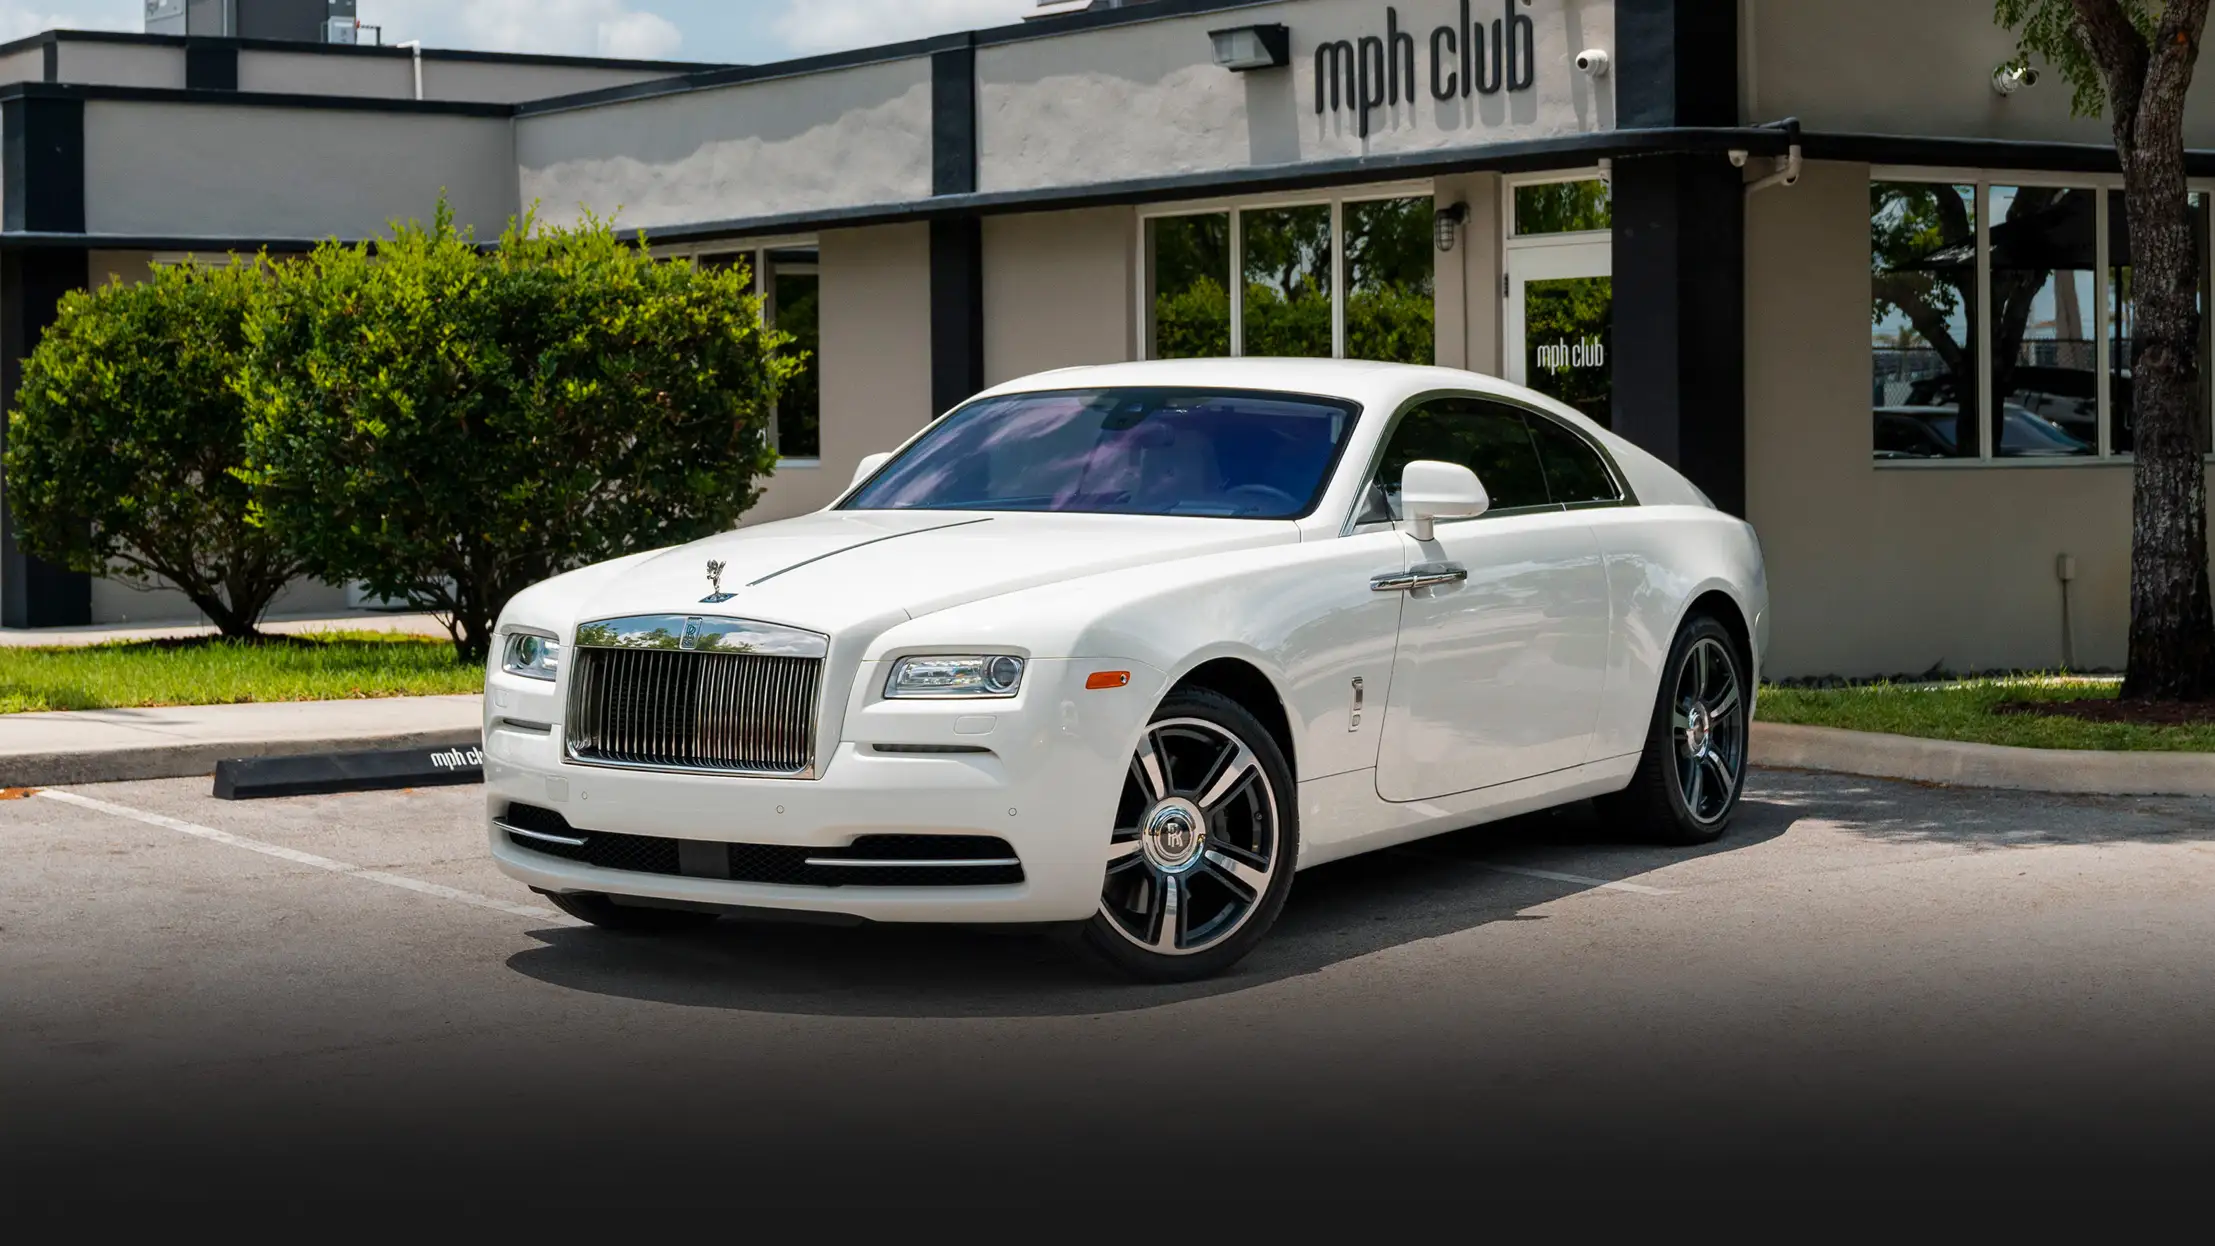 White with white interior Rolls Royce Wraith rental profile view mph club